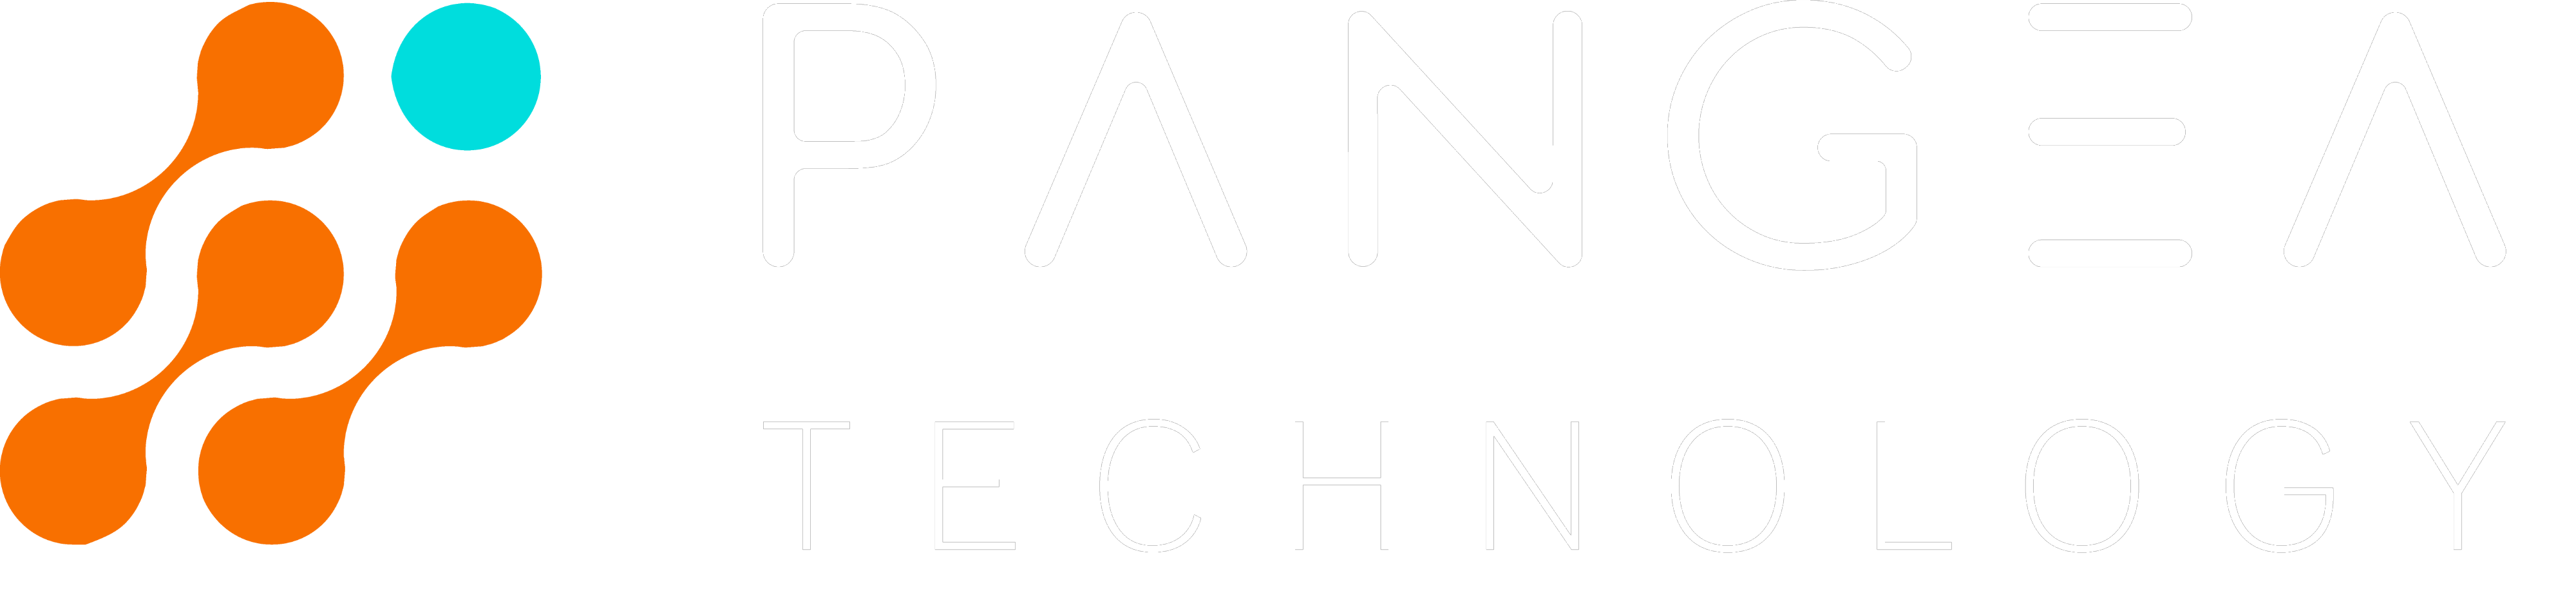 Pangea Technology Logo